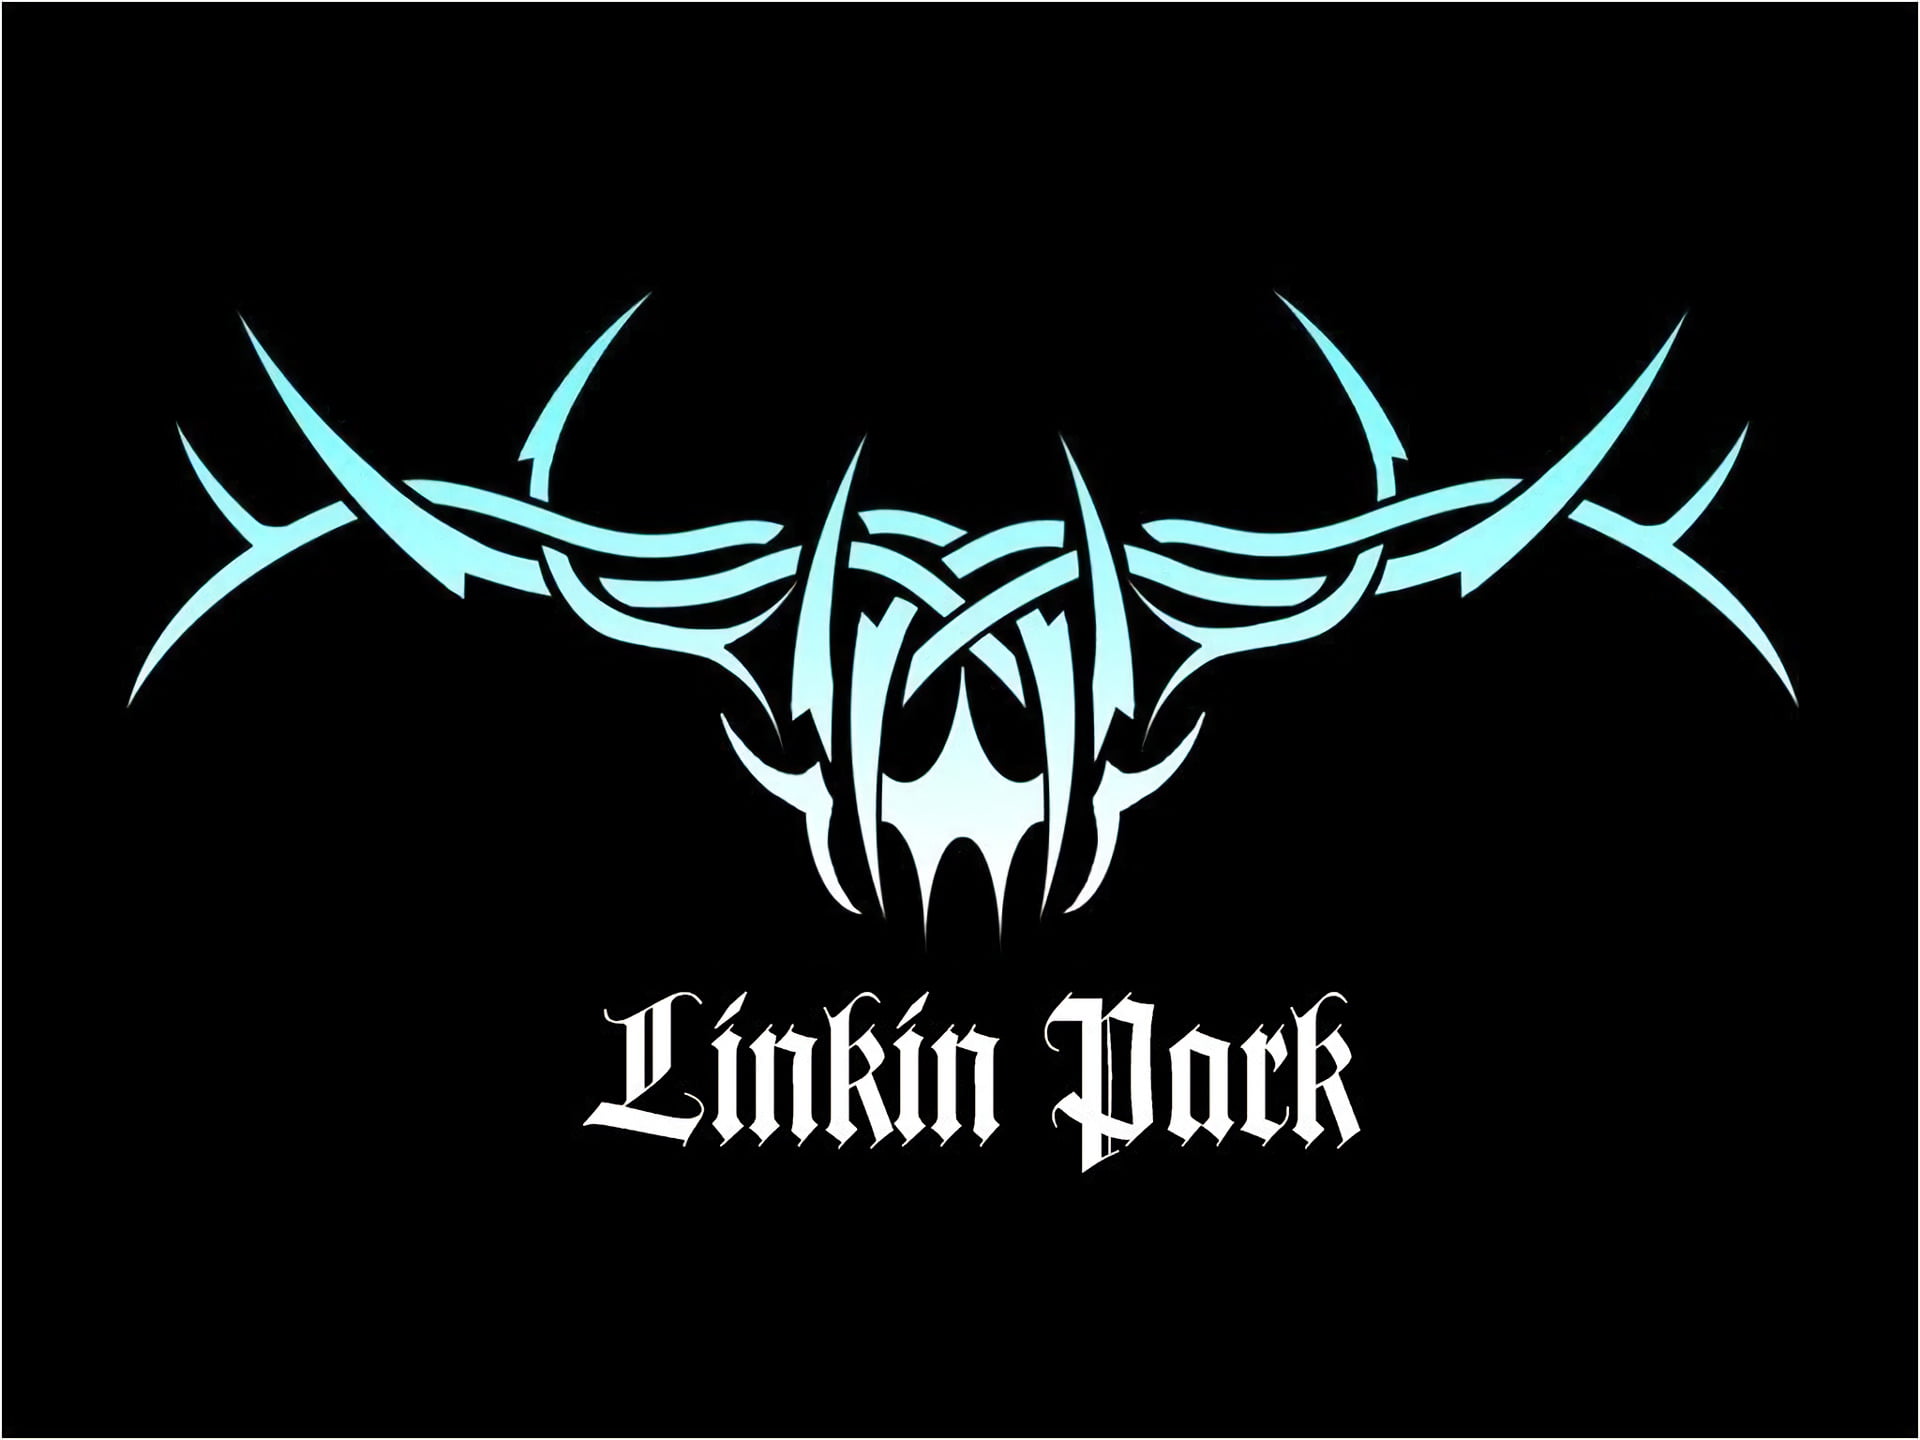 Linking Park wallpaper, Band (Music), Linkin Park, text, communication